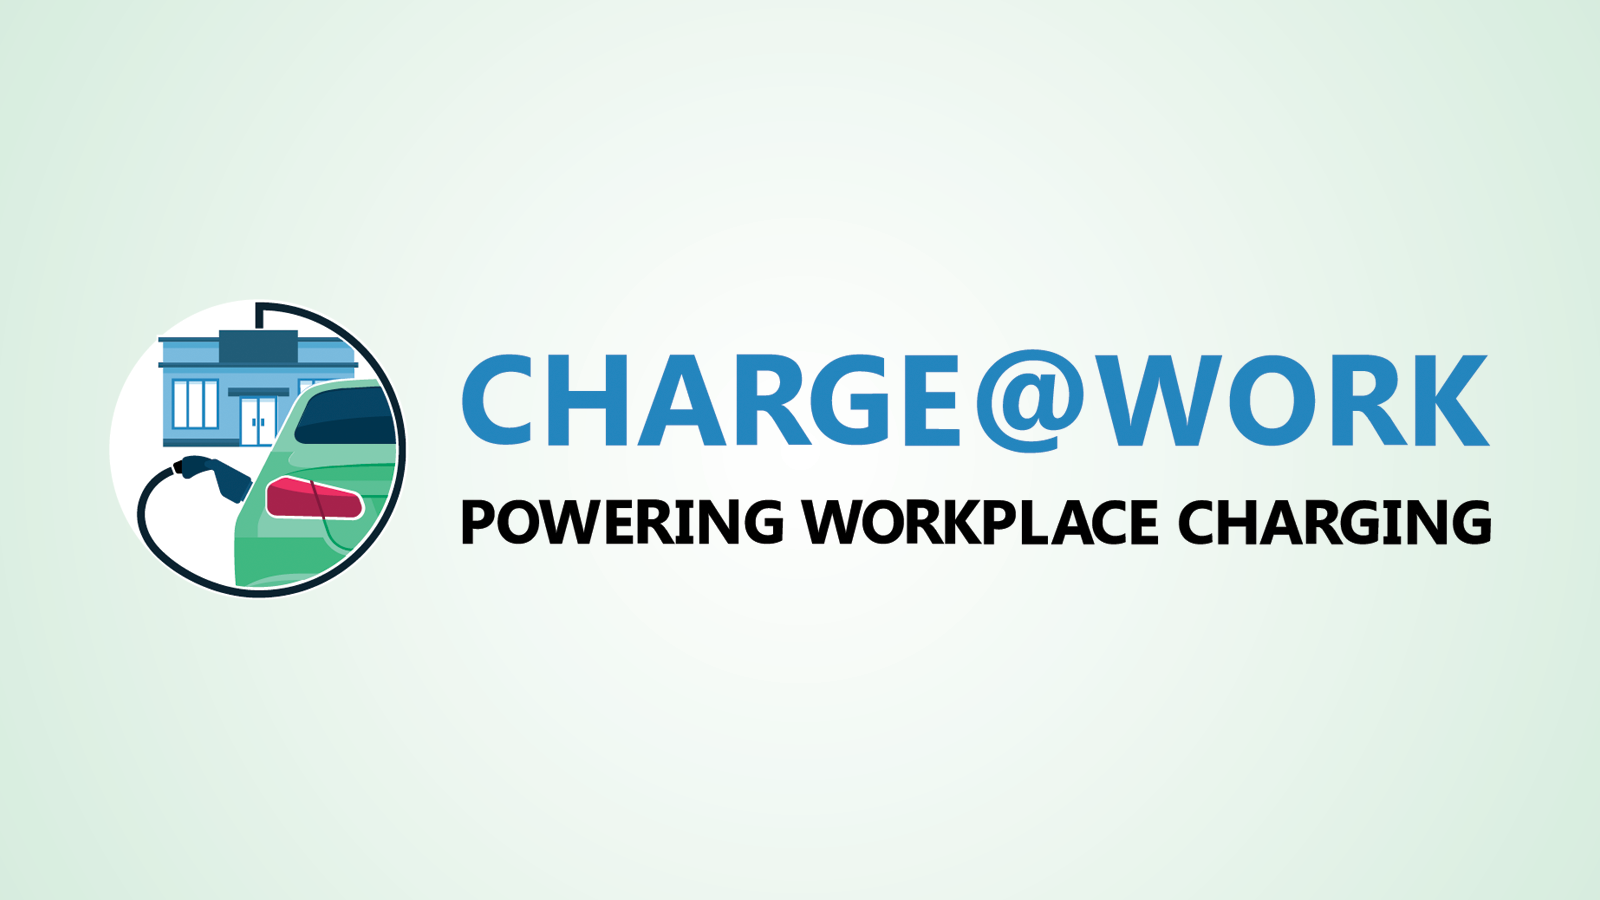 New DOE-backed, CALSTART-led program aims to supercharge EV uptake by accelerating workplace charging